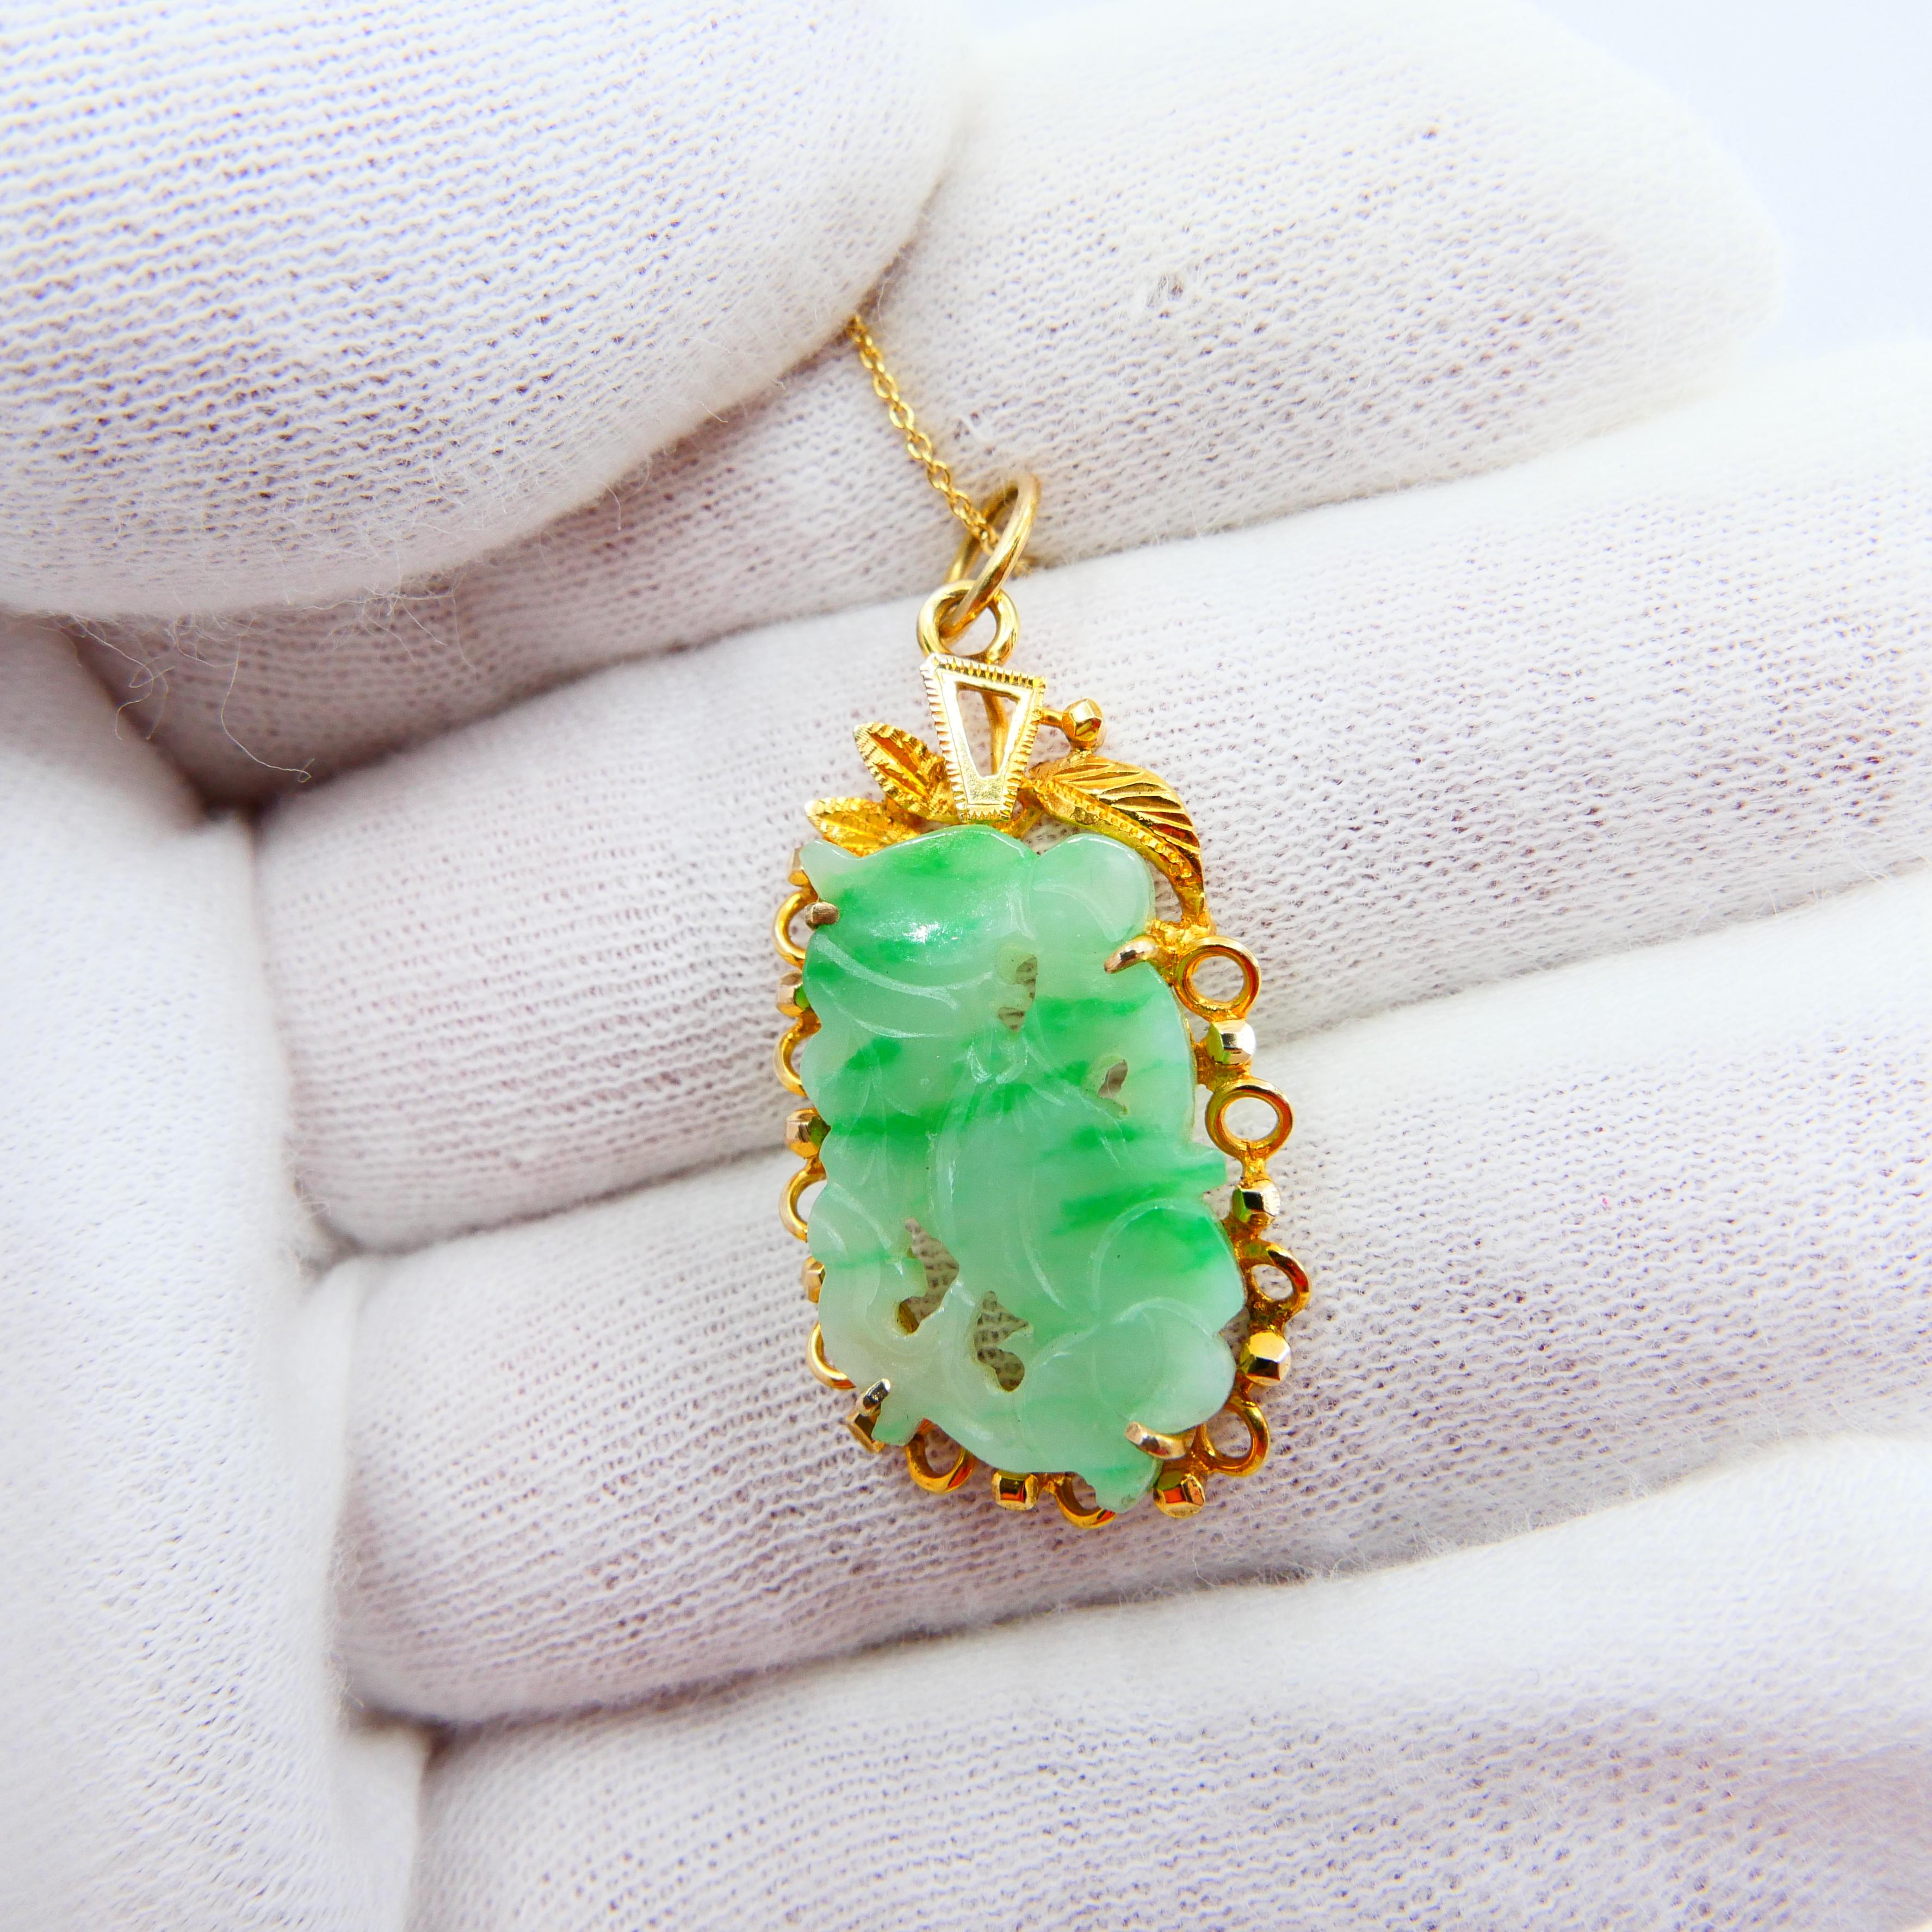 Certified Type A Jadeite Jade Pendant Drop Necklace, Apple Green Veins, N.O.S For Sale 2